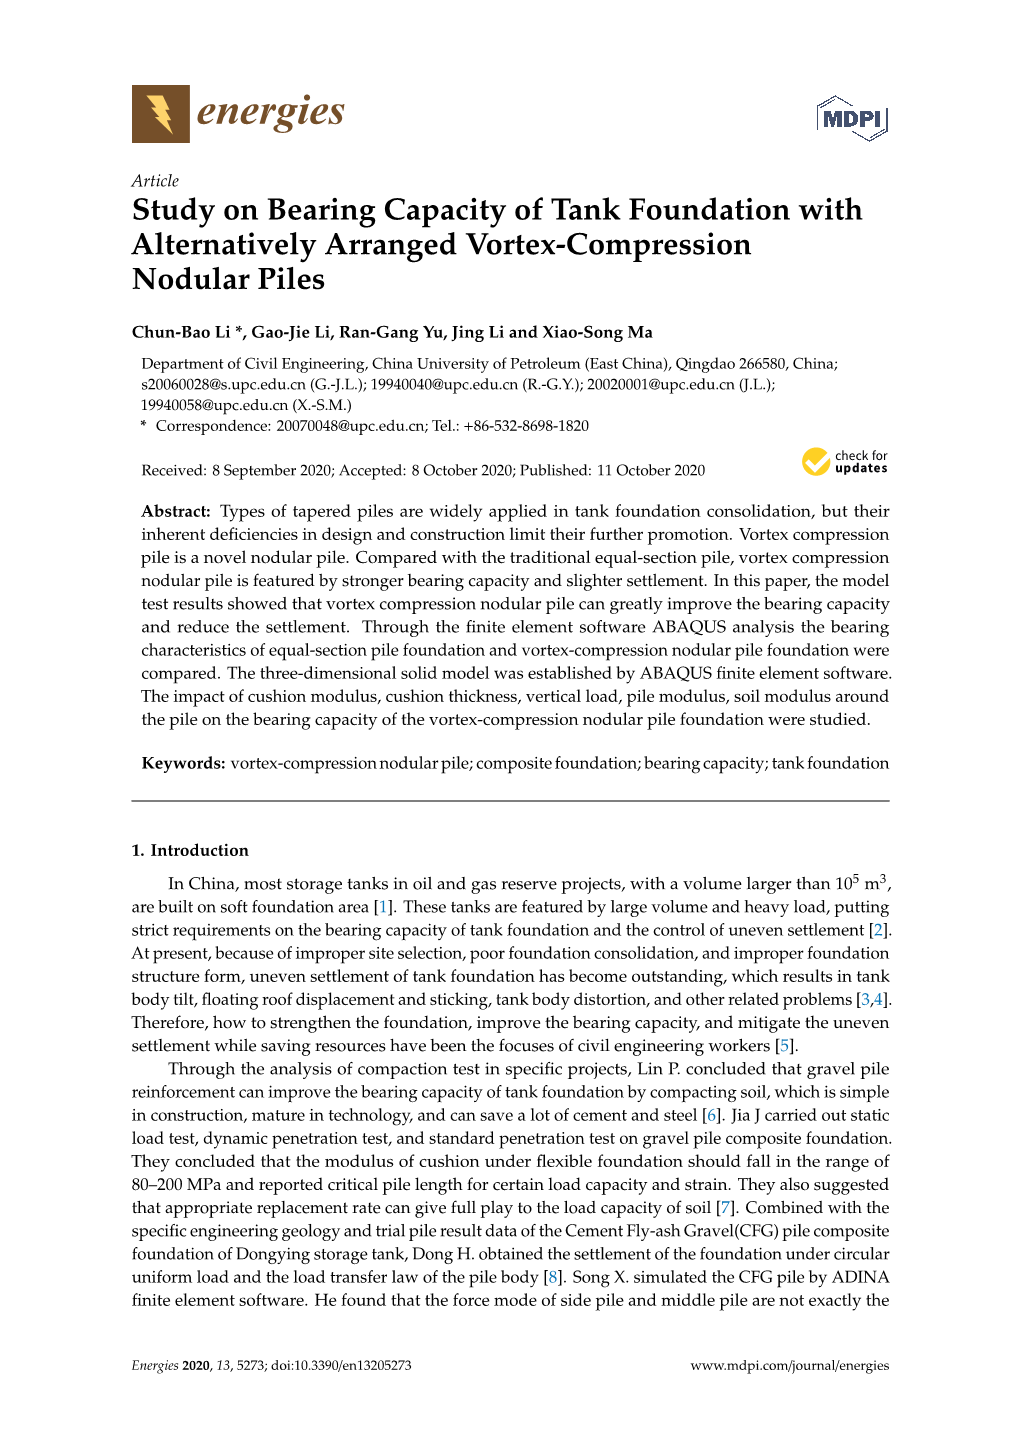 Study on Bearing Capacity of Tank Foundation with Alternatively Arranged Vortex-Compression Nodular Piles